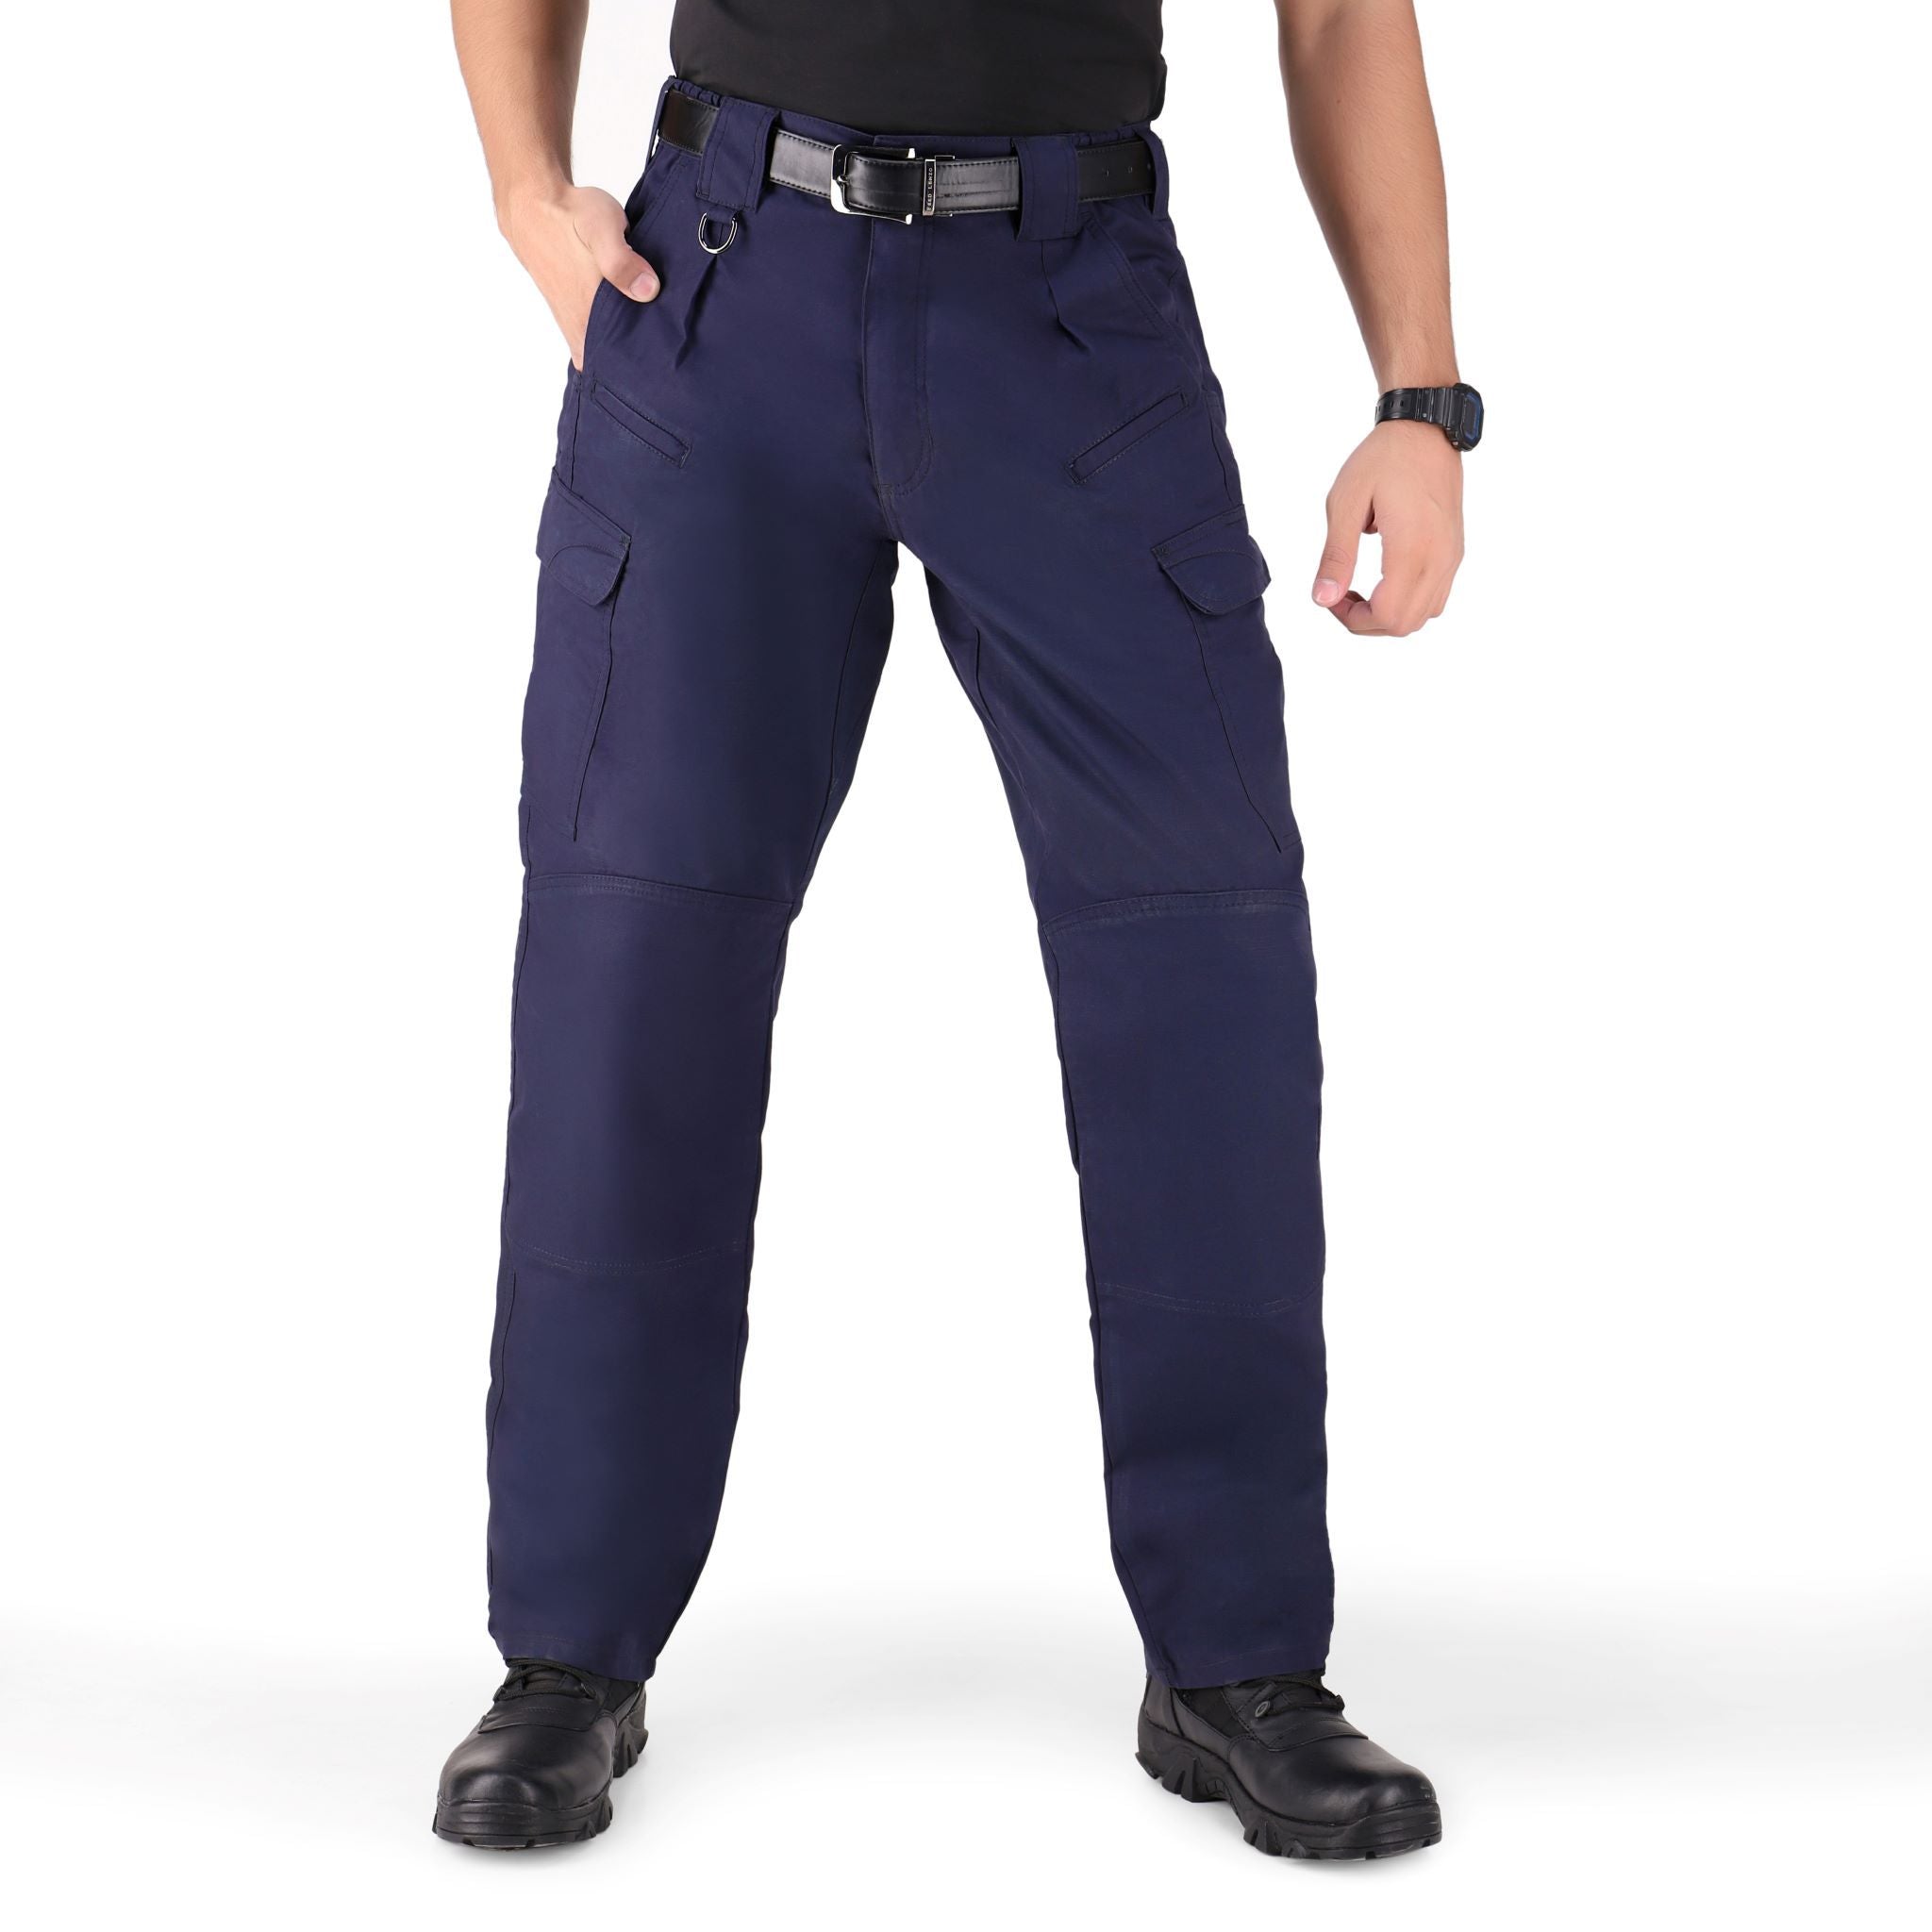 Navy blue cargo pants